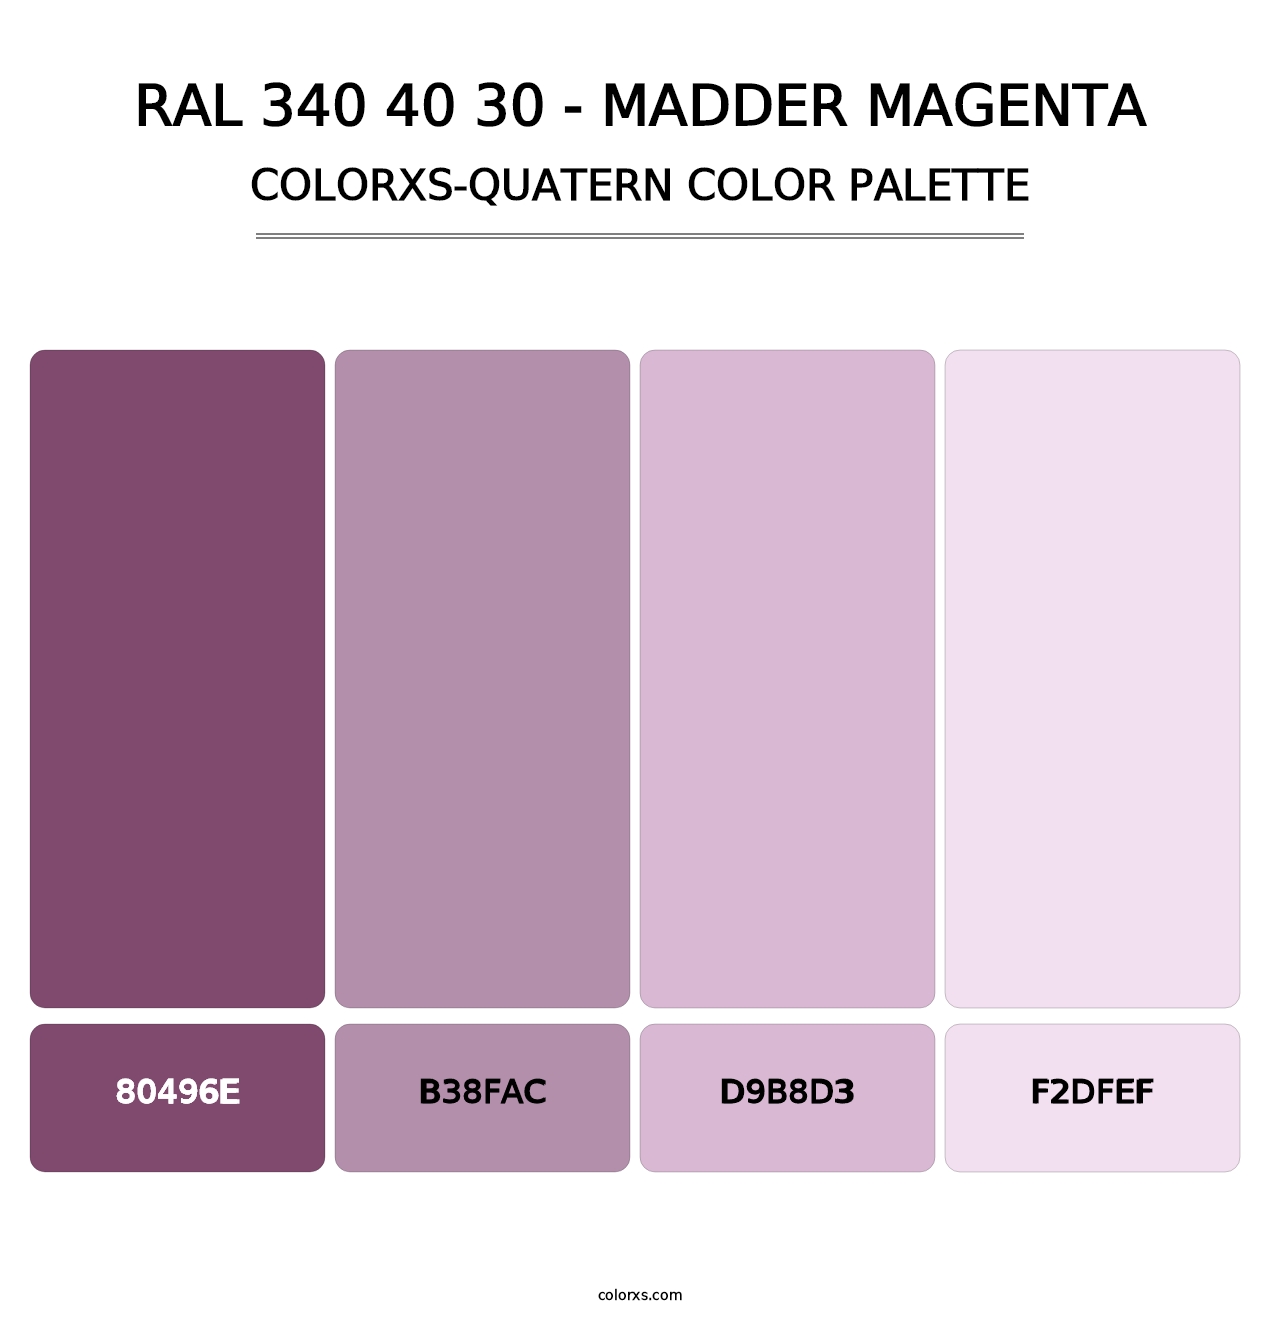 RAL 340 40 30 - Madder Magenta - Colorxs Quatern Palette